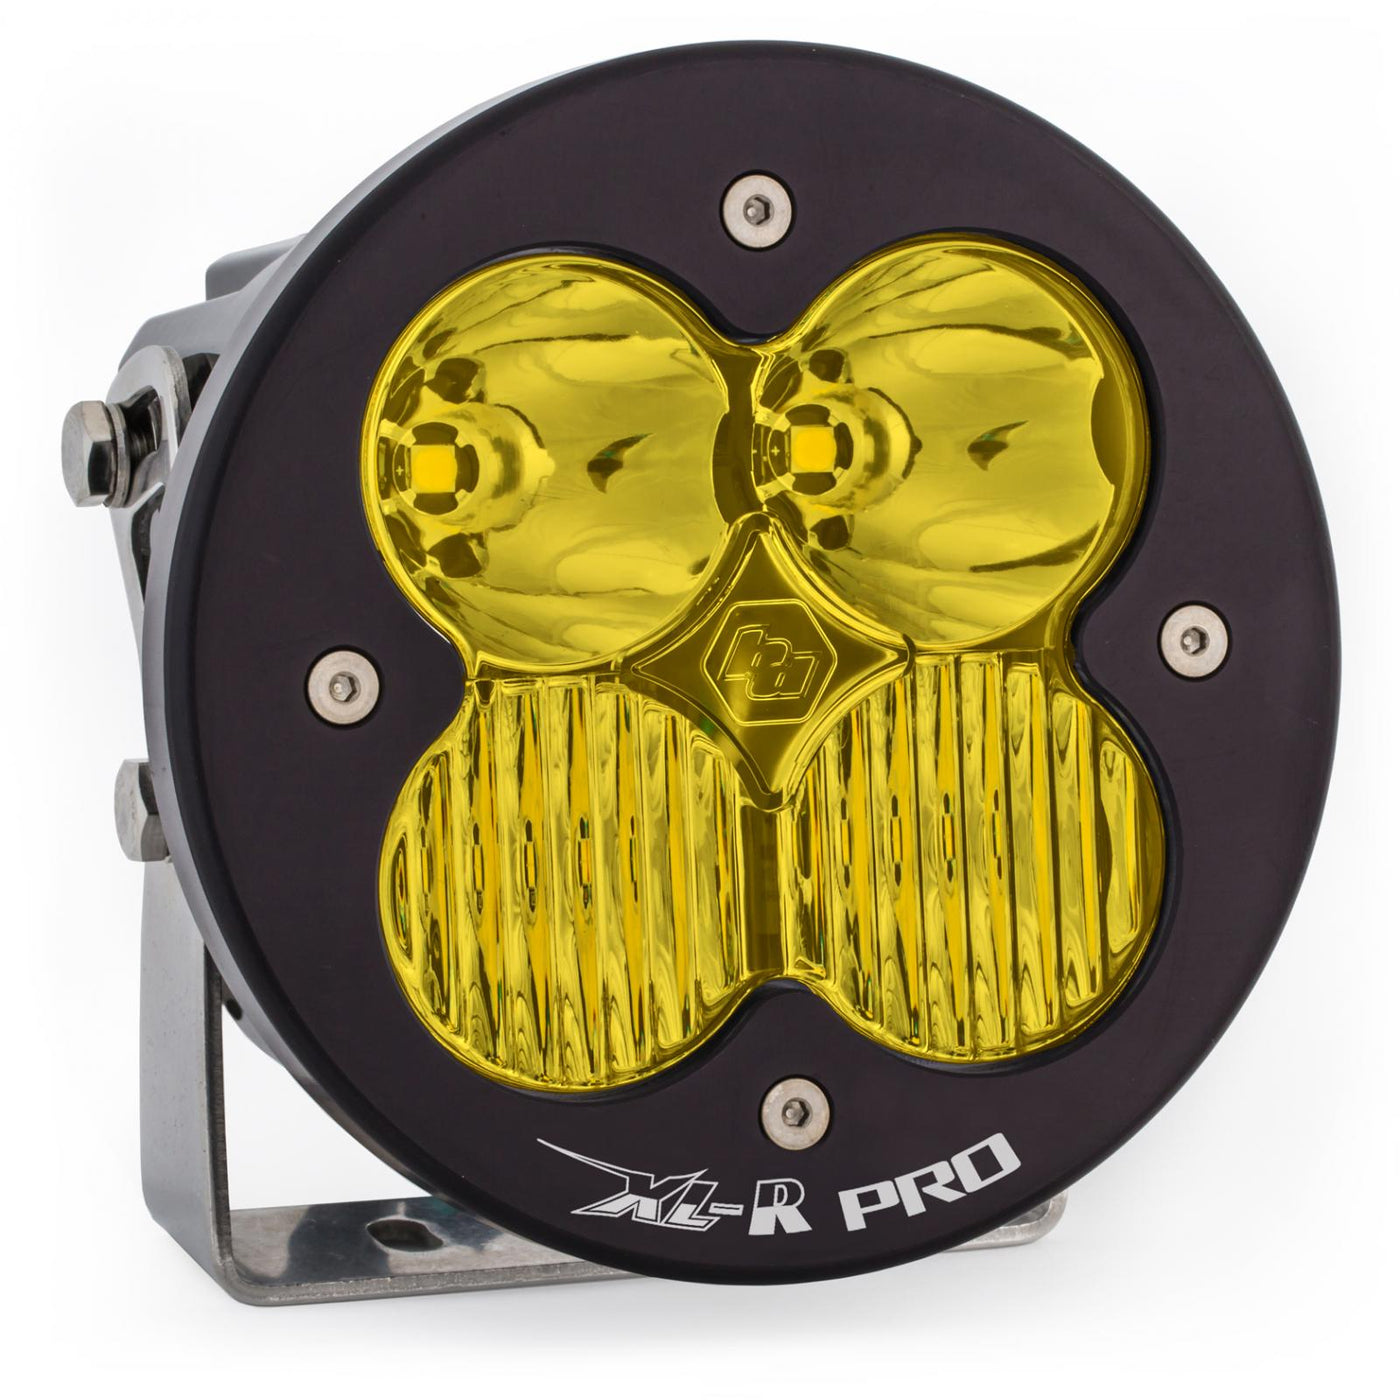 Baja Designs XL-R Pro LED Auxiliary Light Pod - Universal